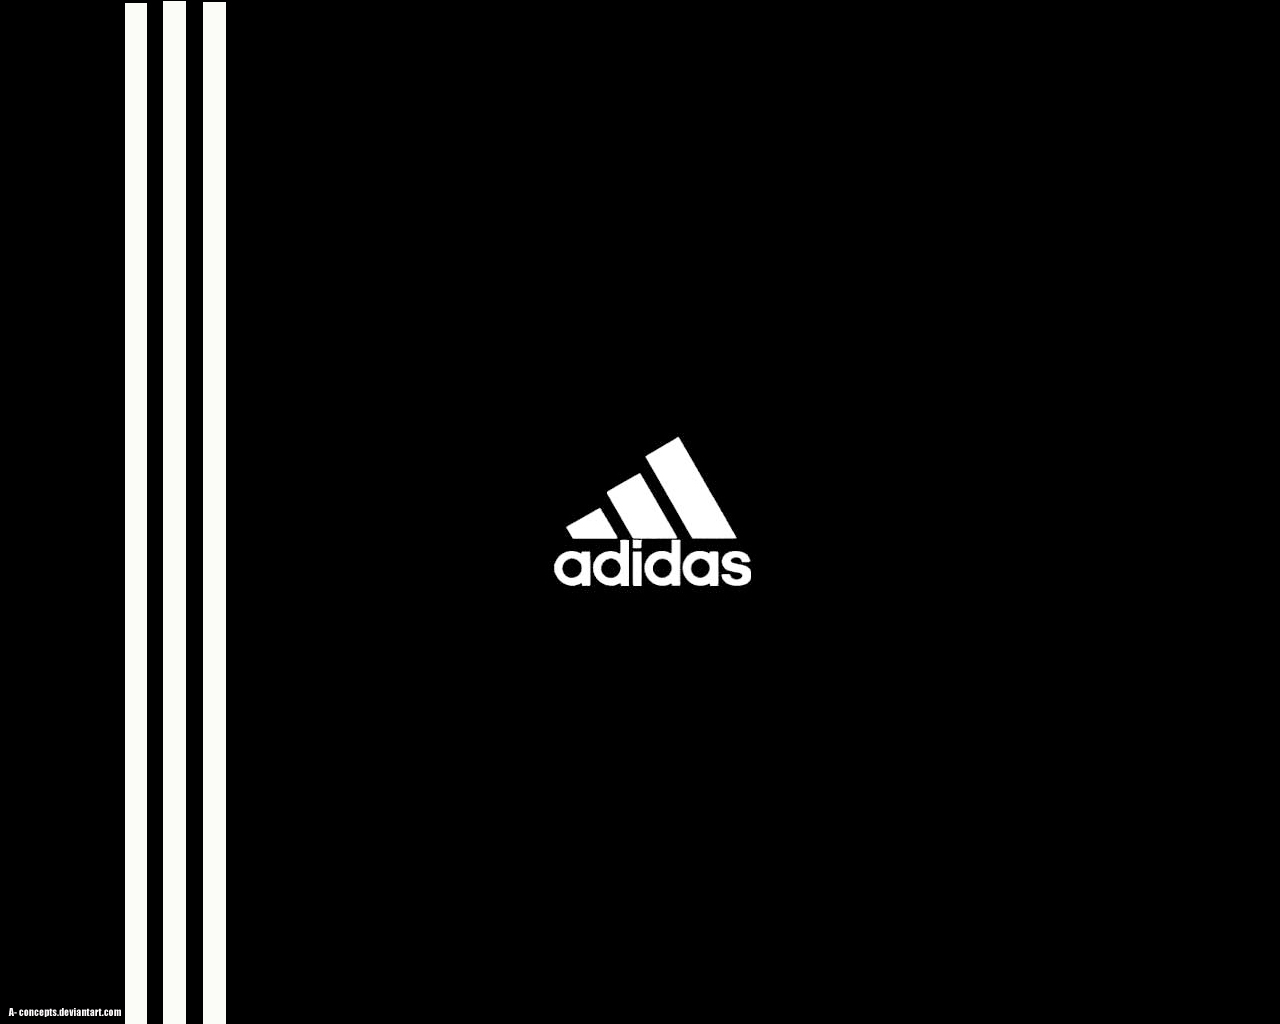 adidas, logos, background, black